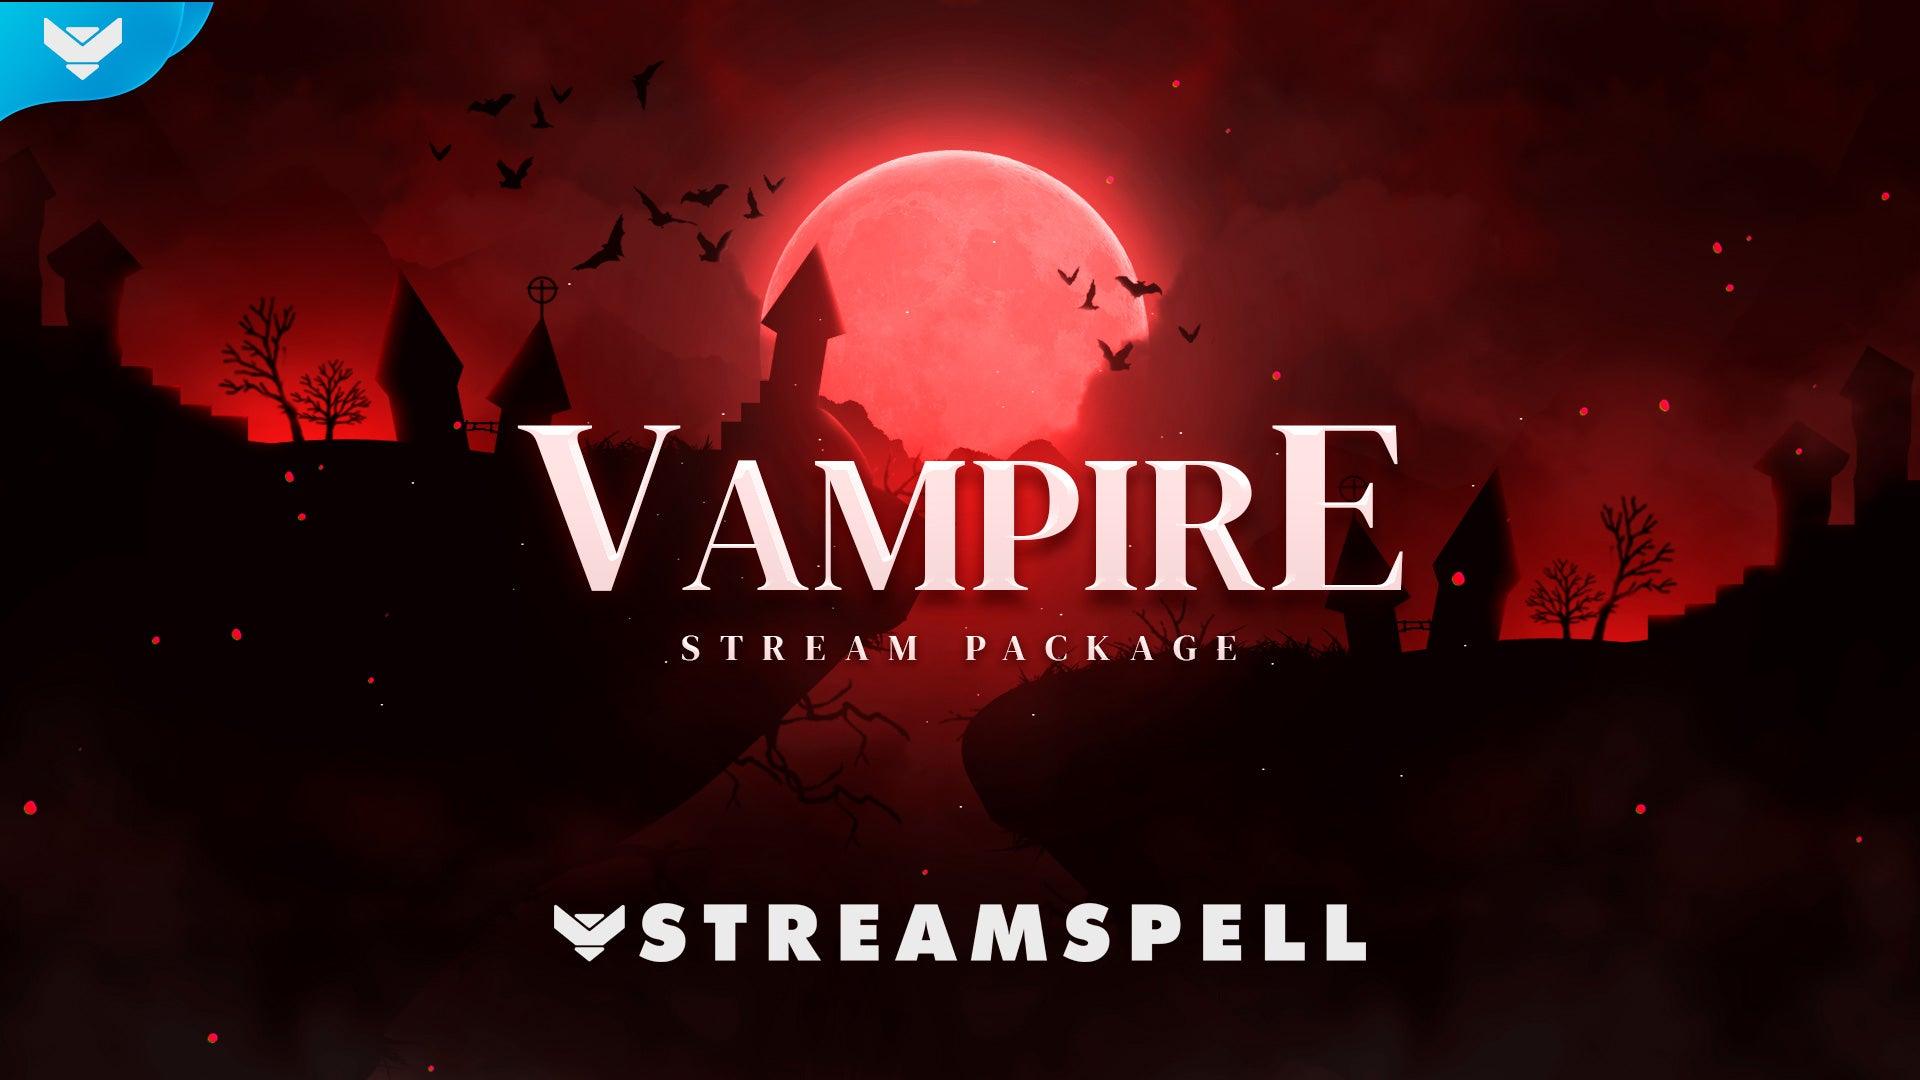 Stream Theme Cloud  Listen to Vampire Music playlist online for